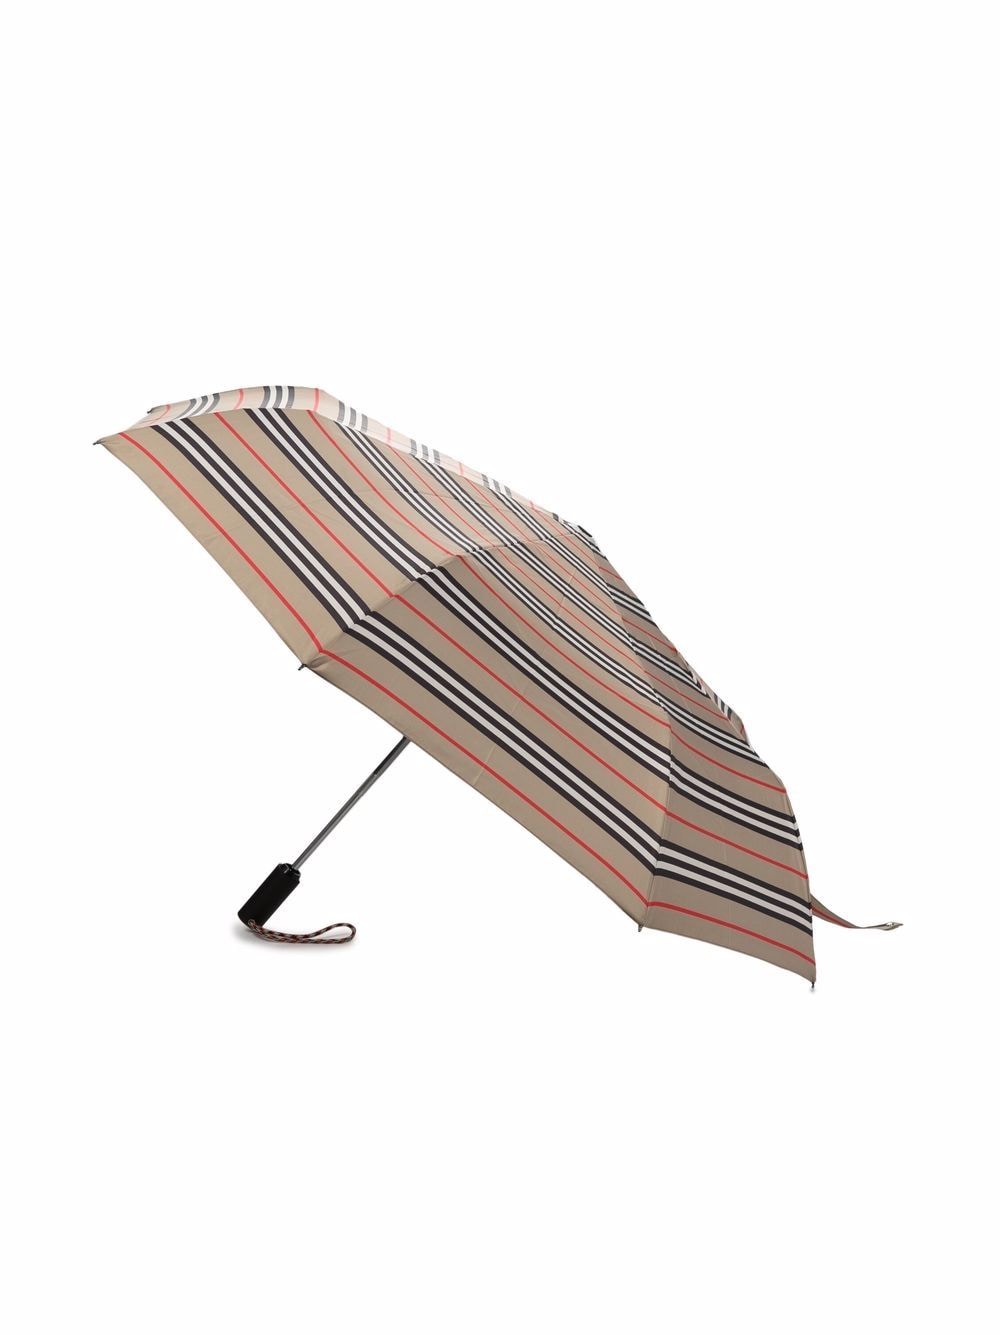 Burberry Vintage Check Striped Umbrella - Farfetch